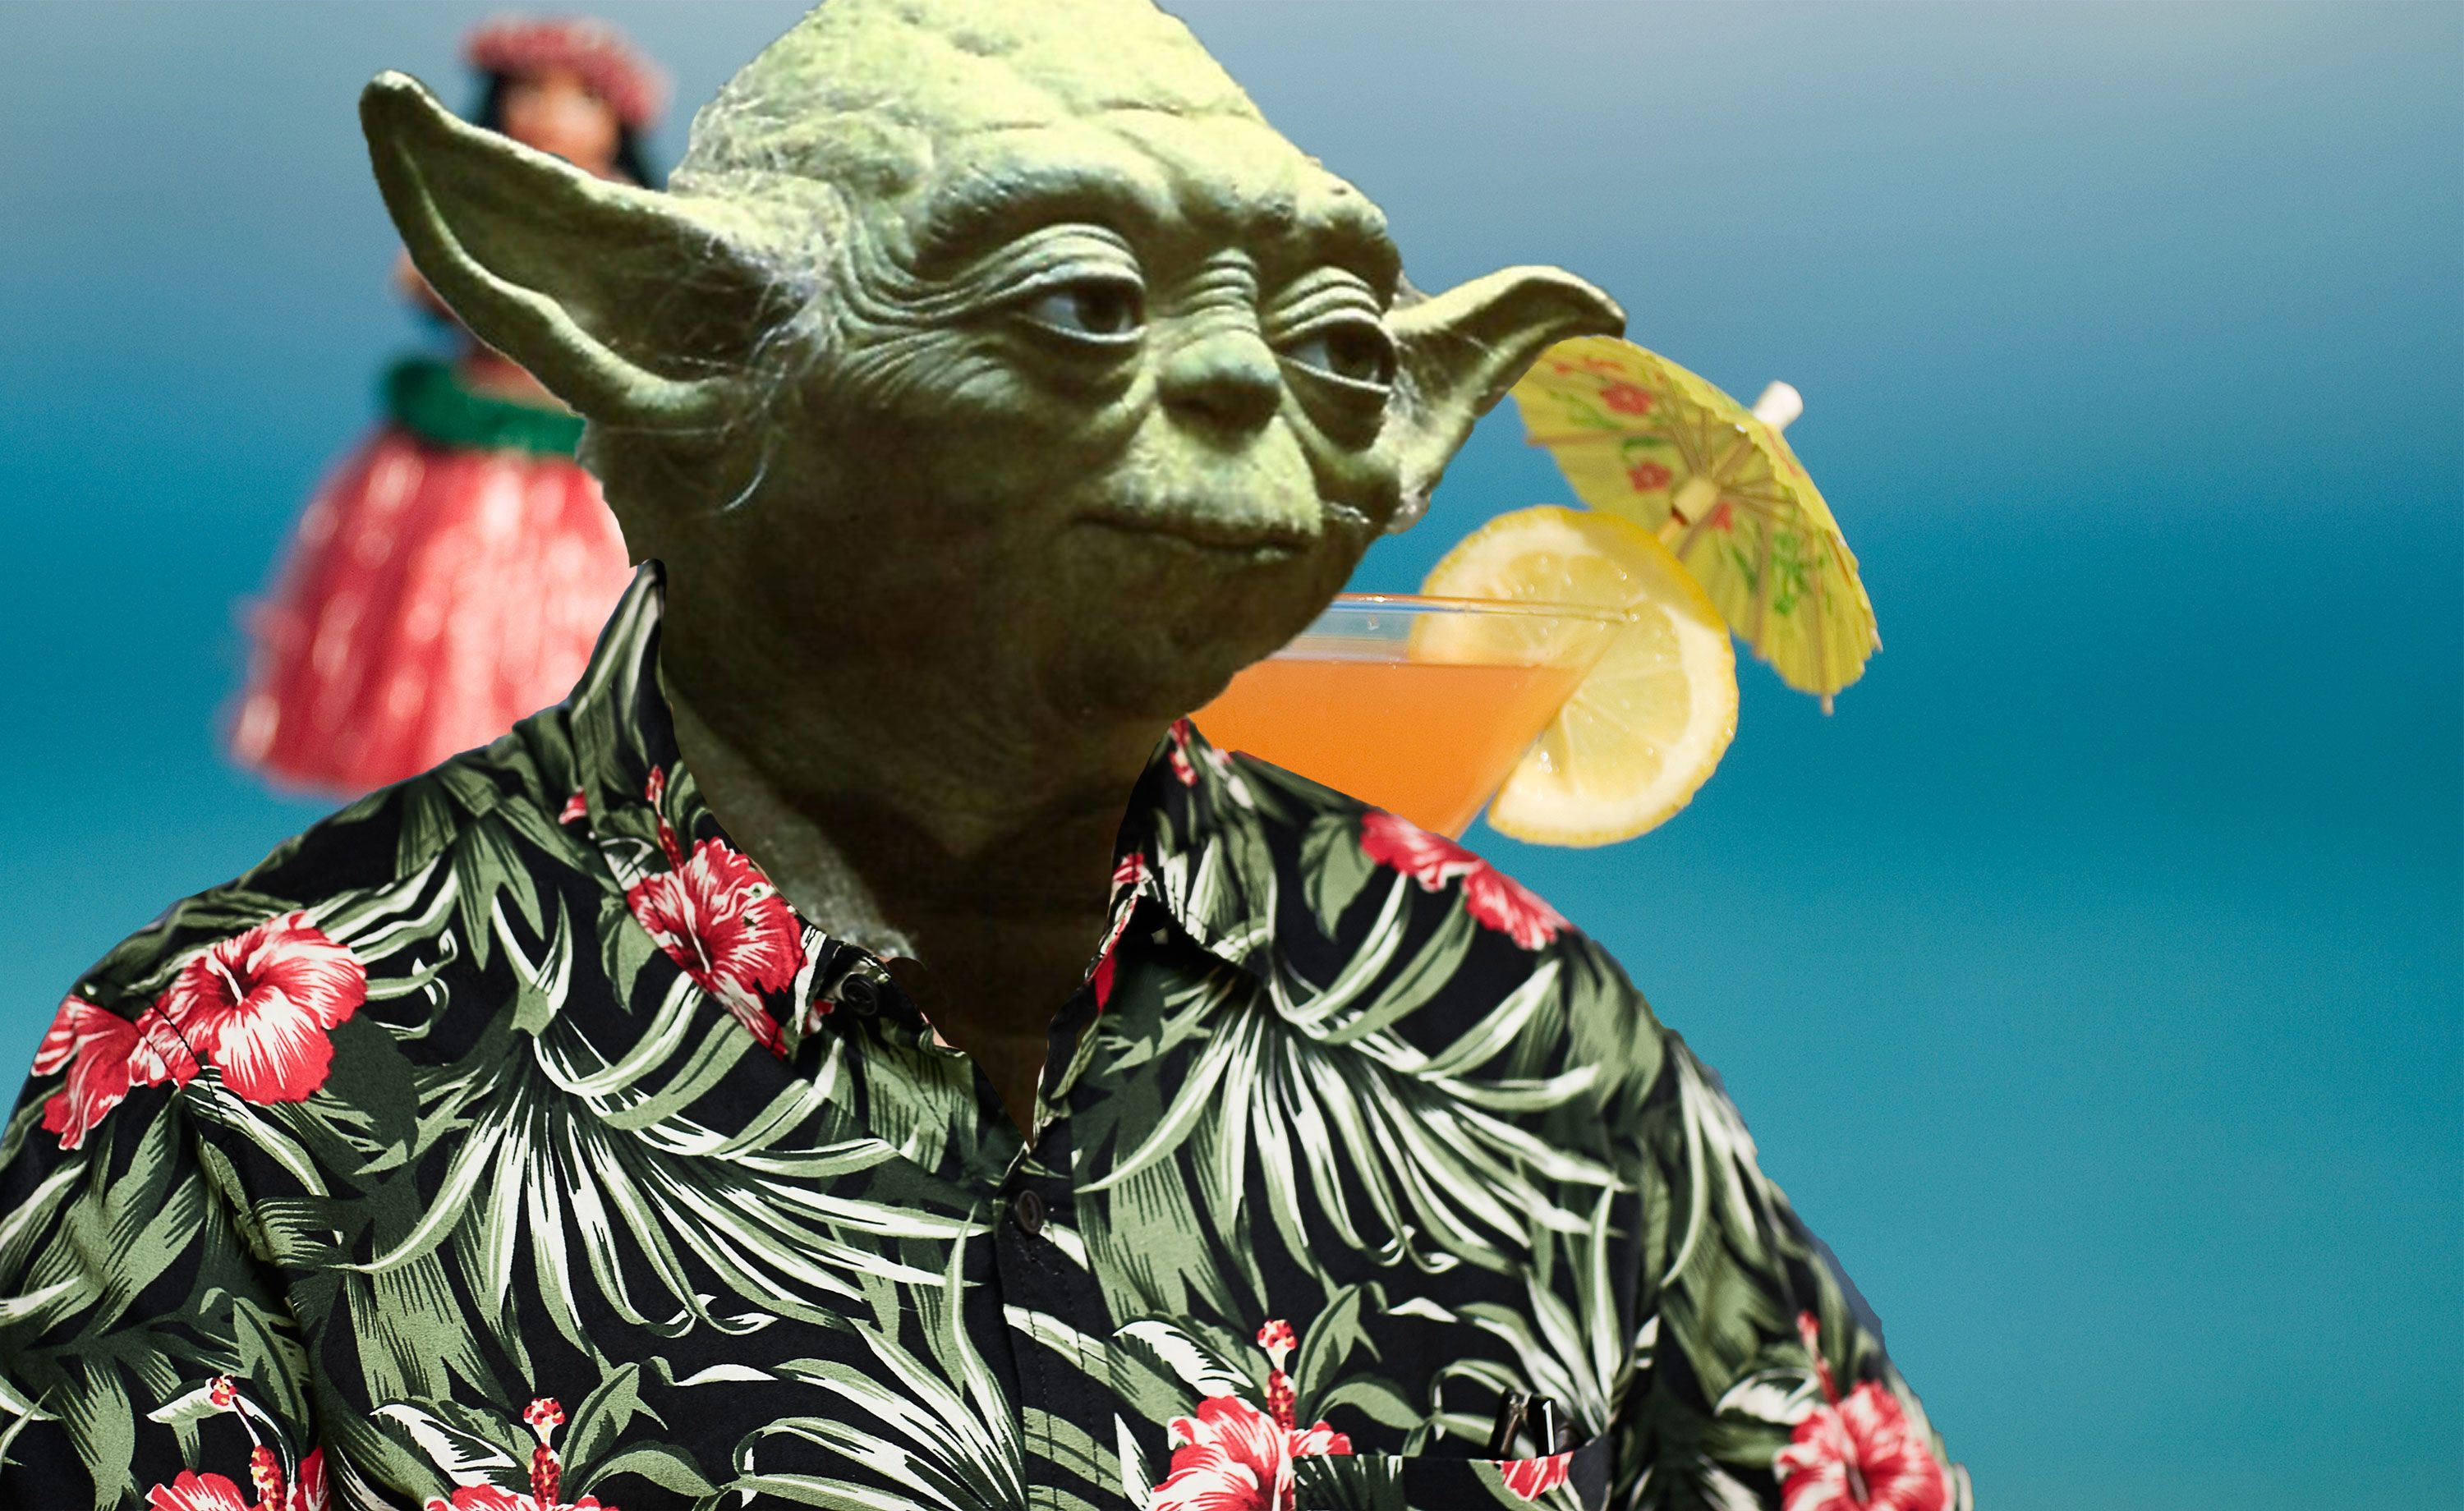 Star Wars' Yoda grew up in Hawaii, claims university professor